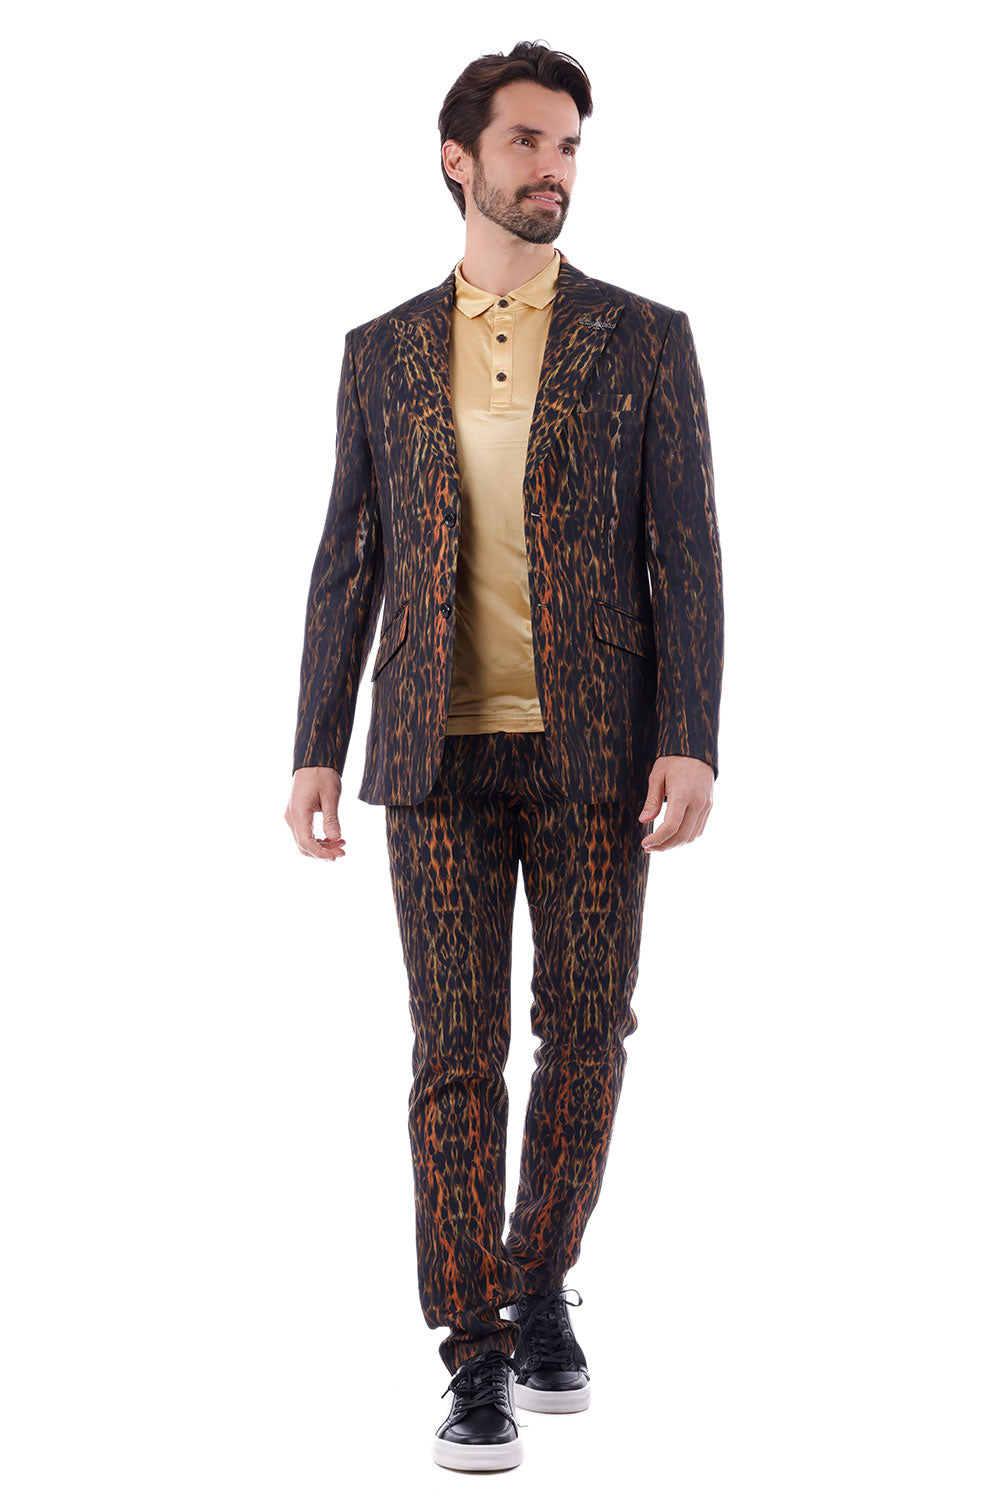 BARABAS Men's Leopard Animal Peak Lapel Suit 3SU23 Brown